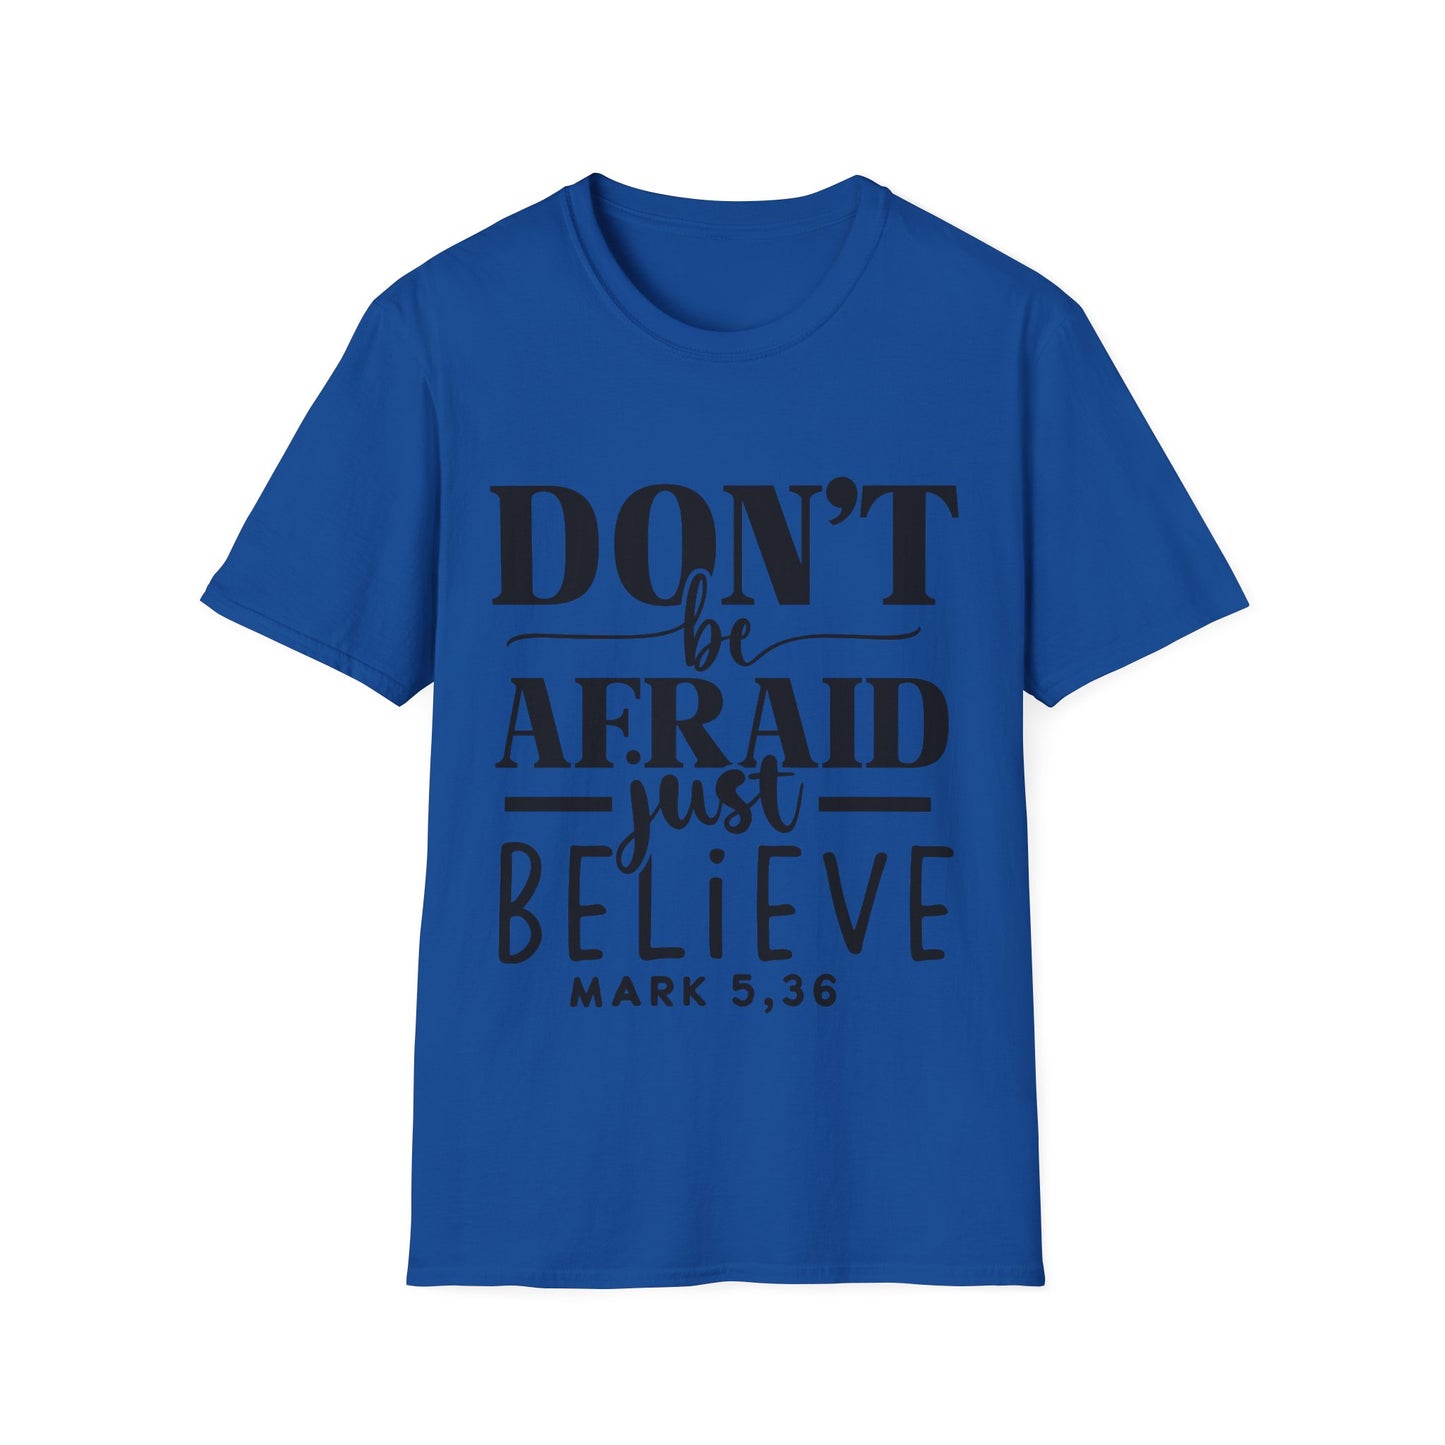 Don't Be Afraid Just Believe Mark 5,36 Triple Viking T-Shirt